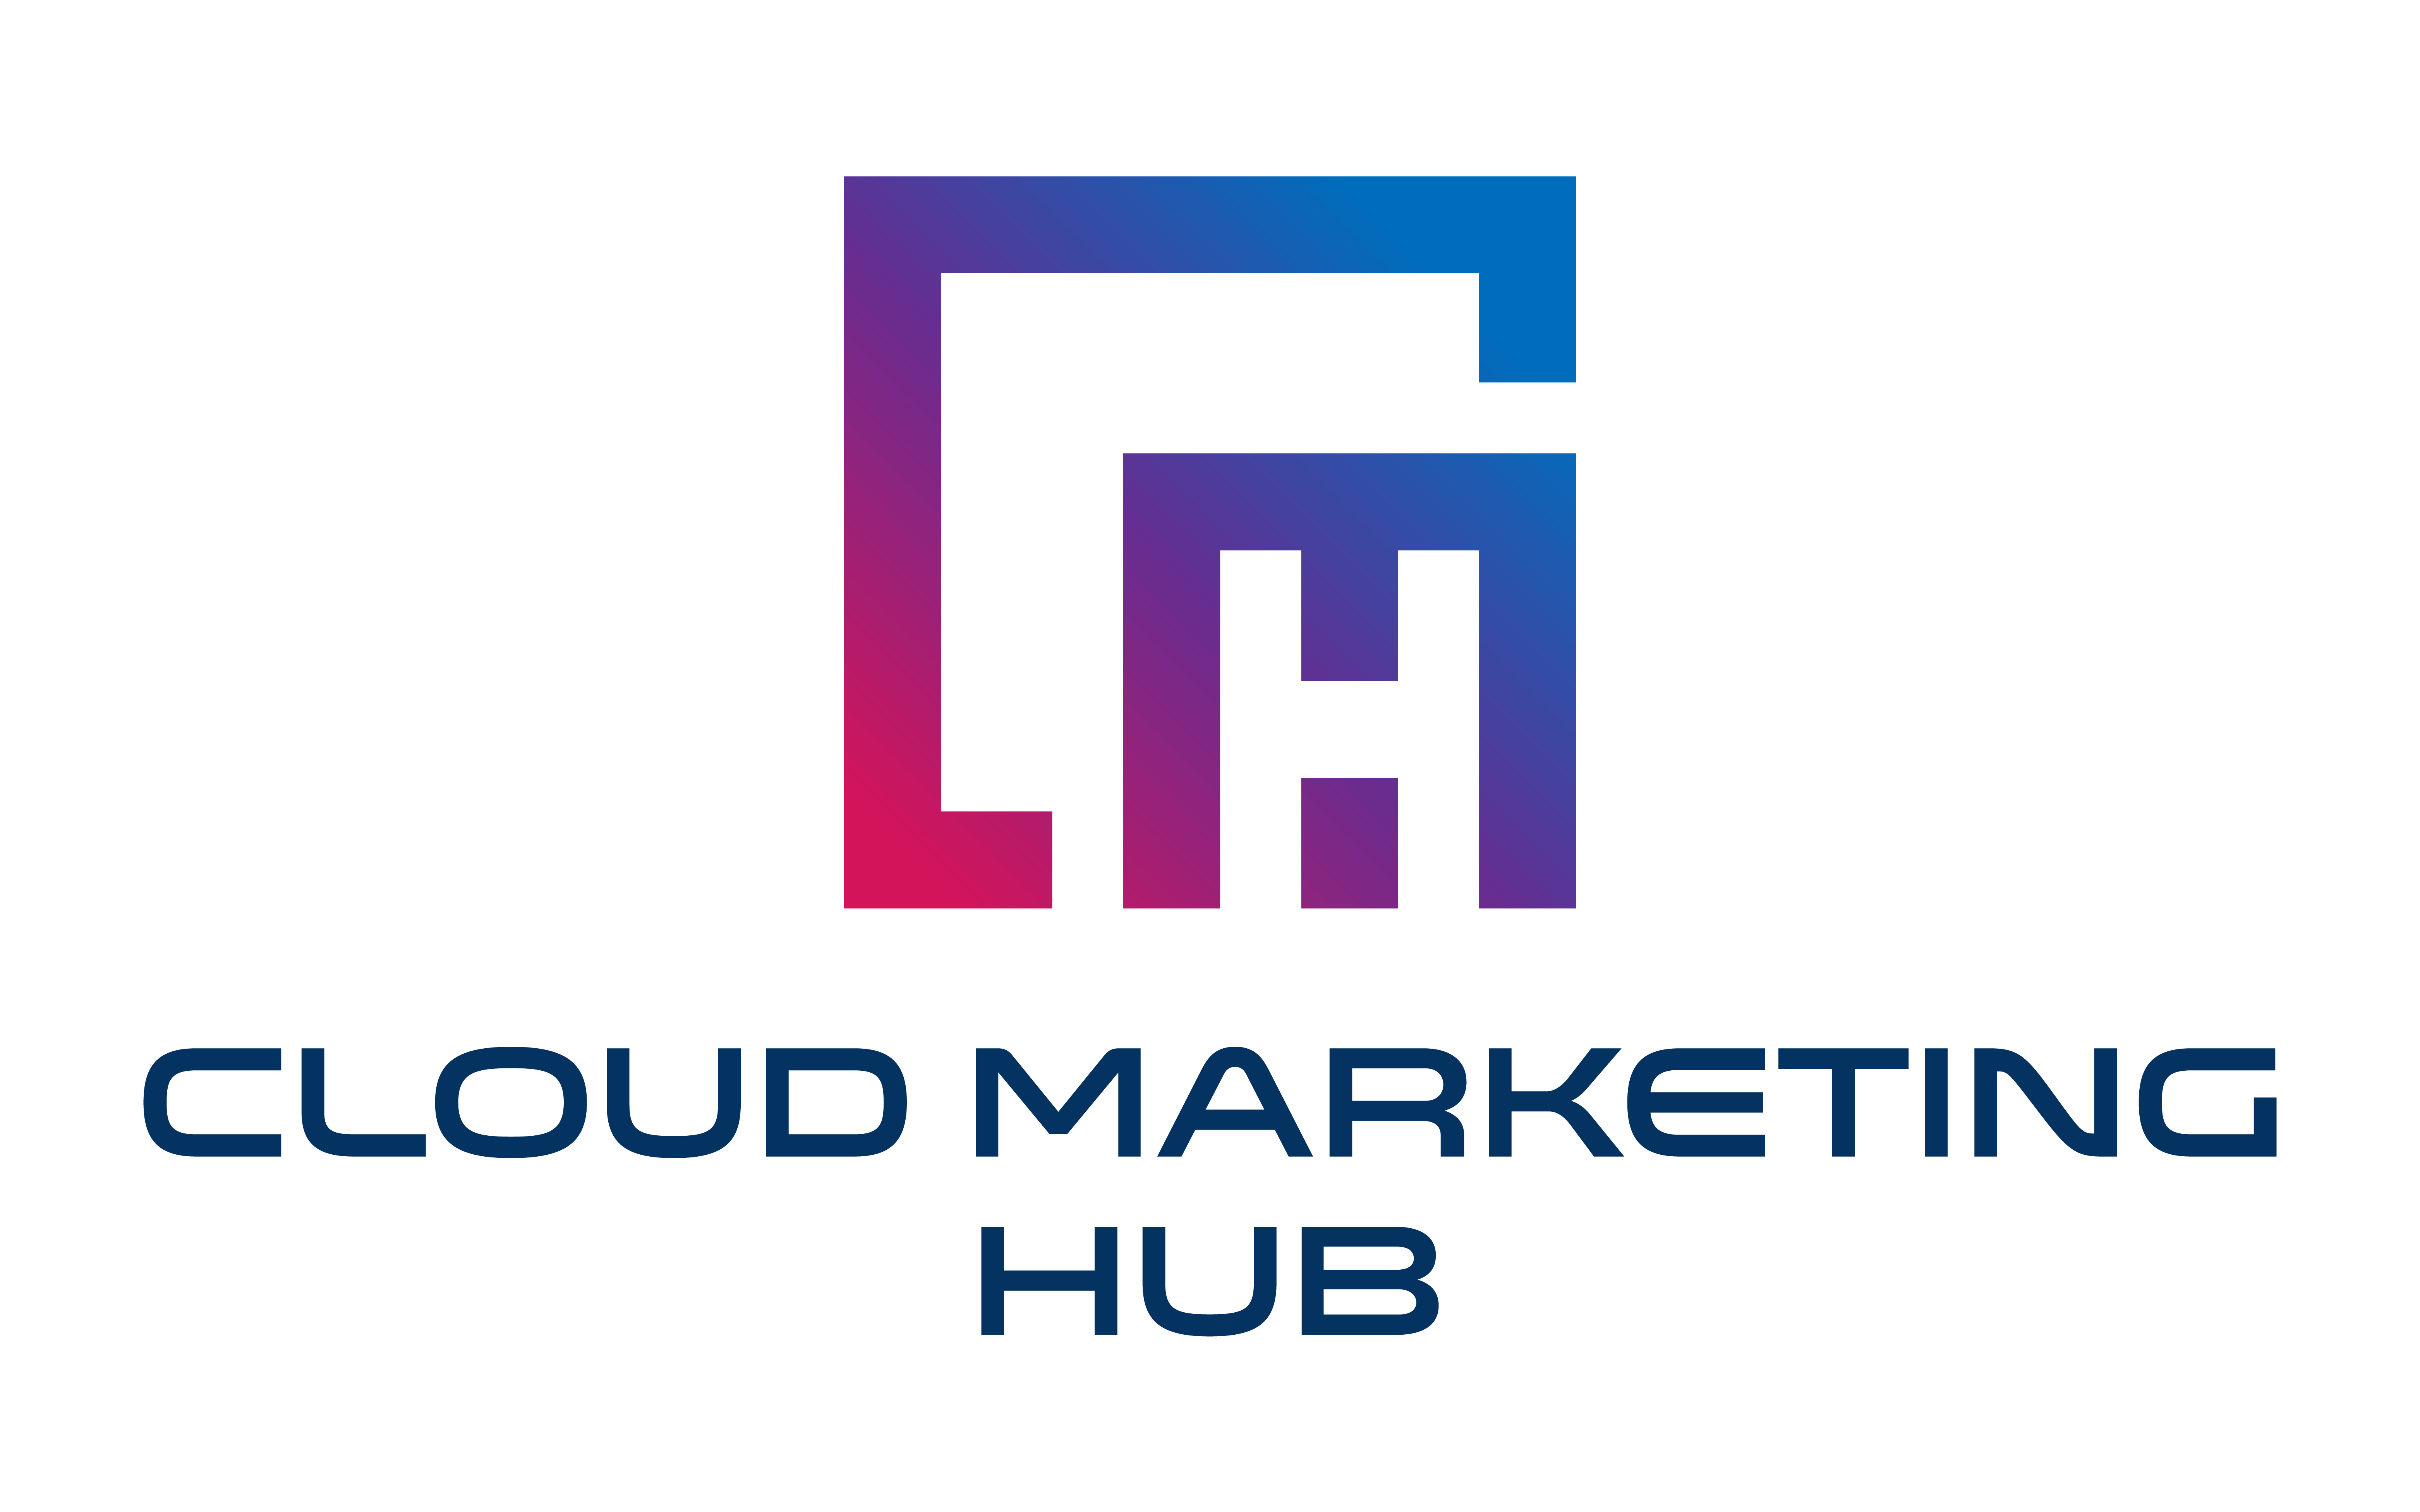 Cloud marketing hub